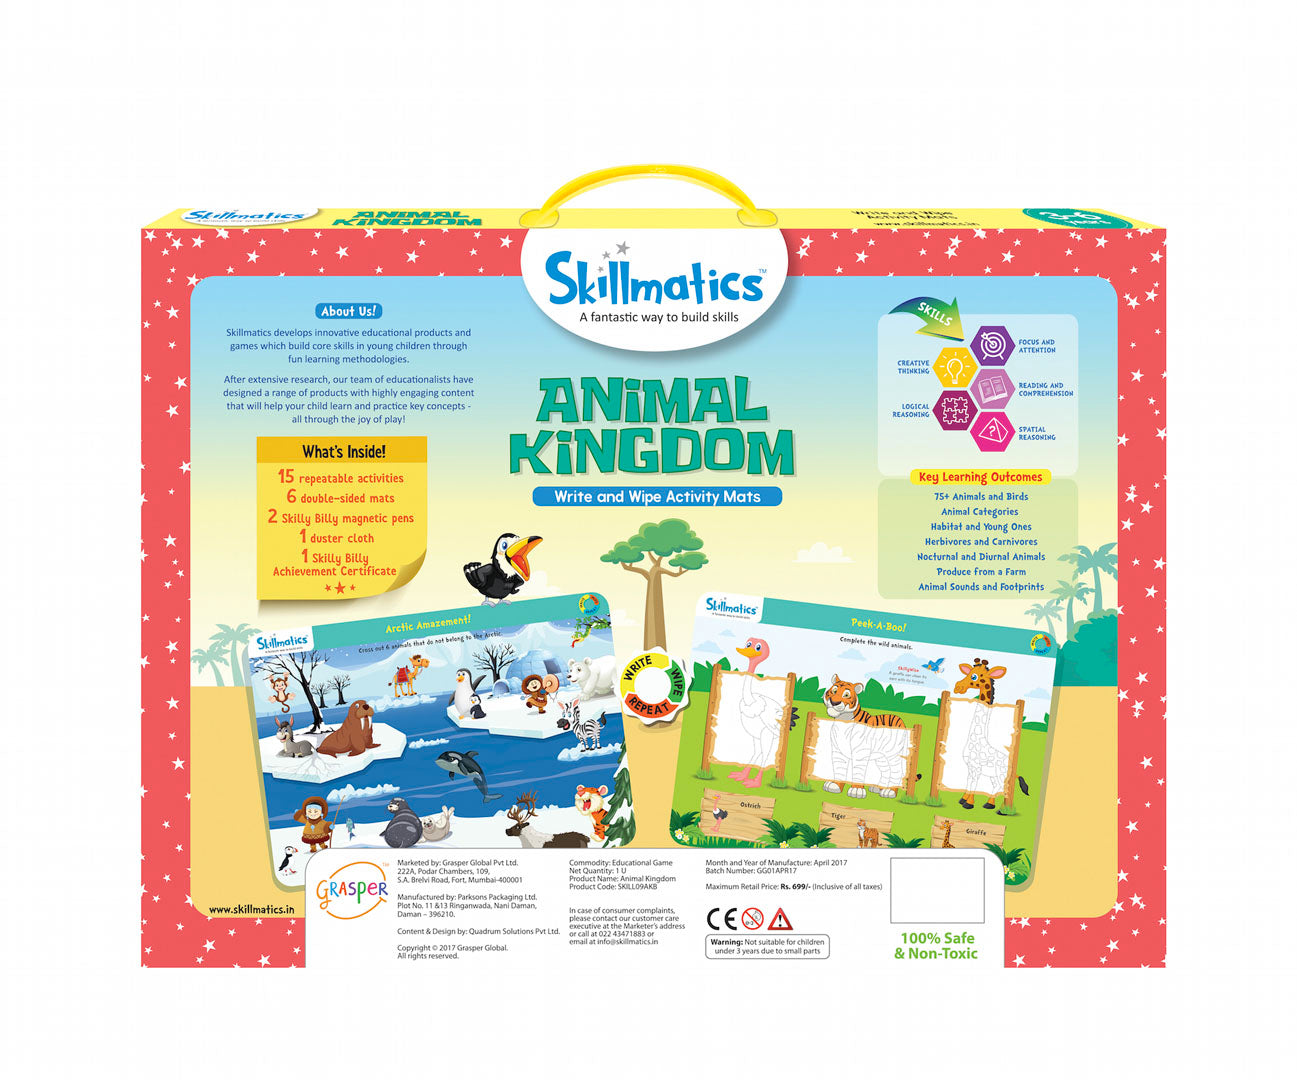 Skillmatics Animal Kingdom - Kids Learn About Over 75 Amazing Animals - SOLONY